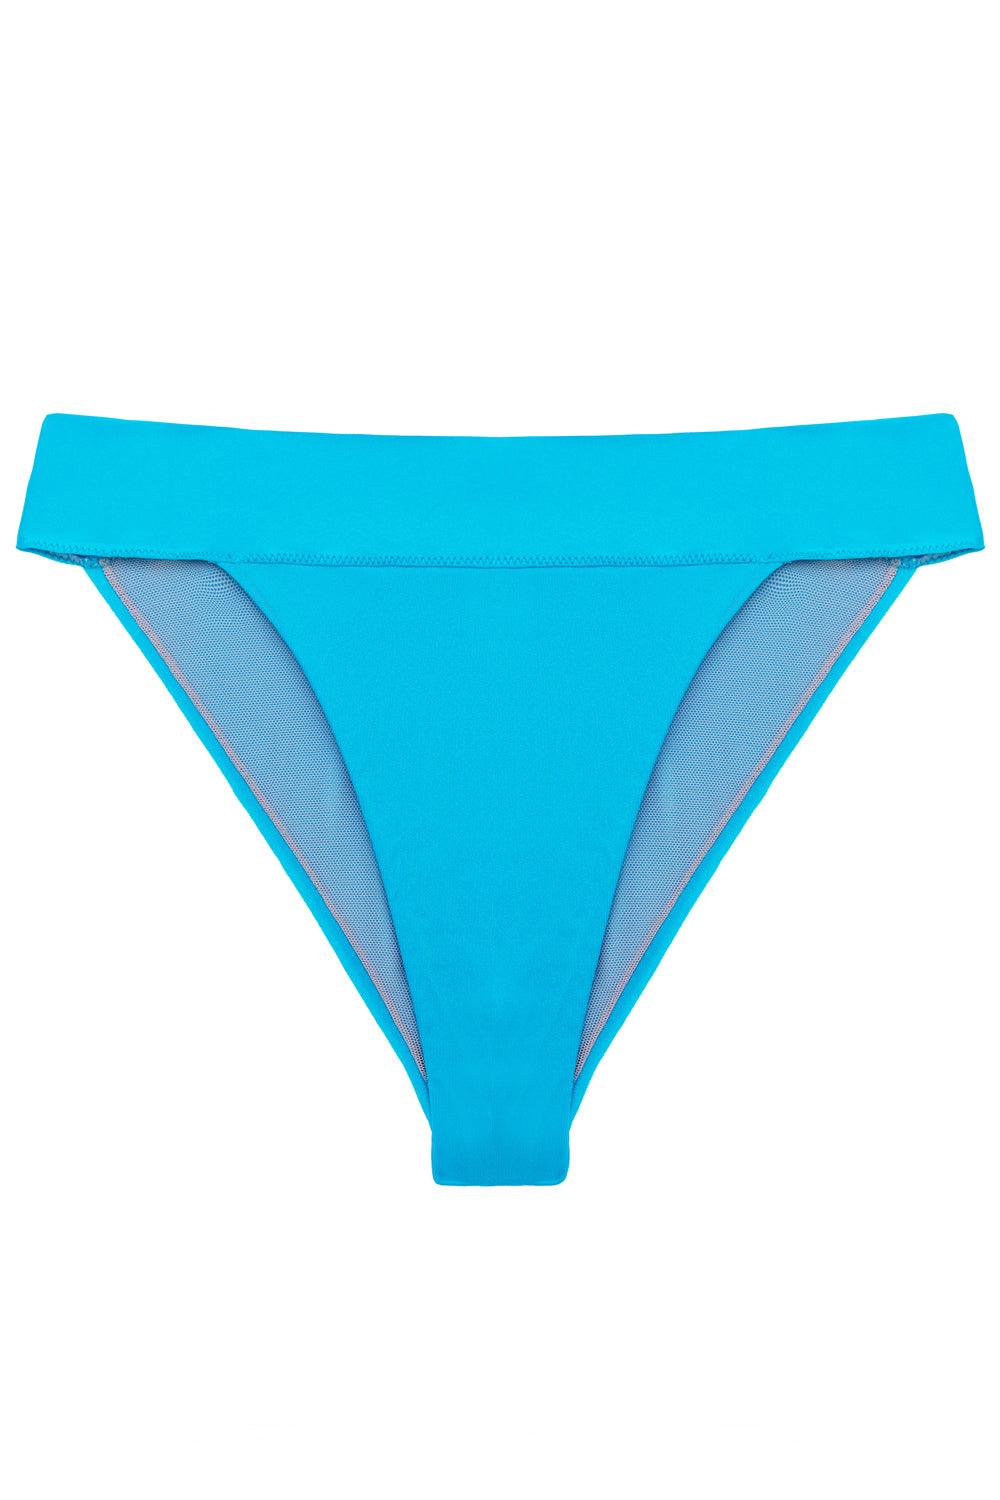 Tonic Blue high waisted bikini bottom - yesUndress